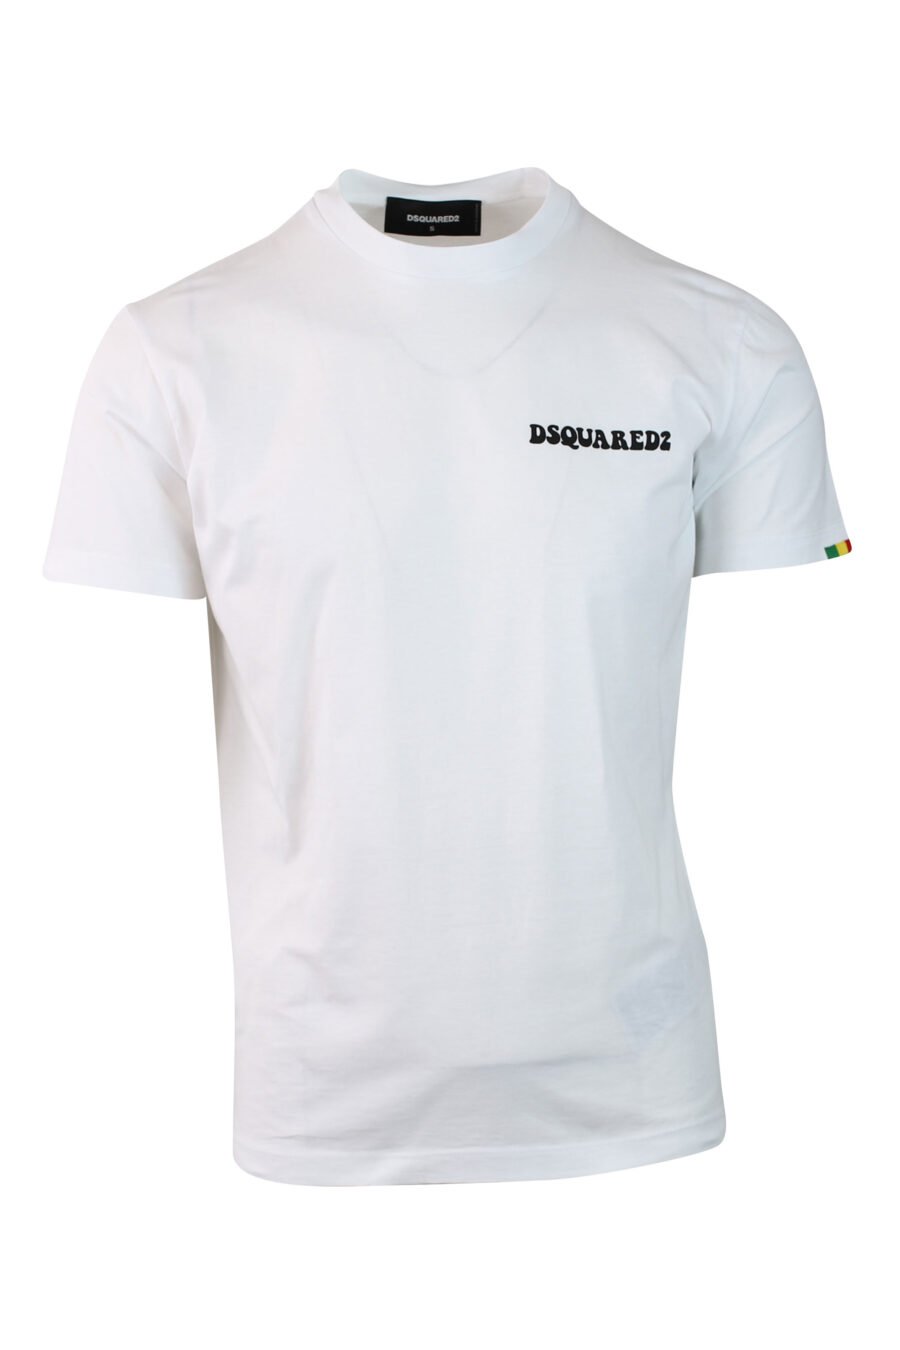 T-shirt branca com minilogo - IMG 0135